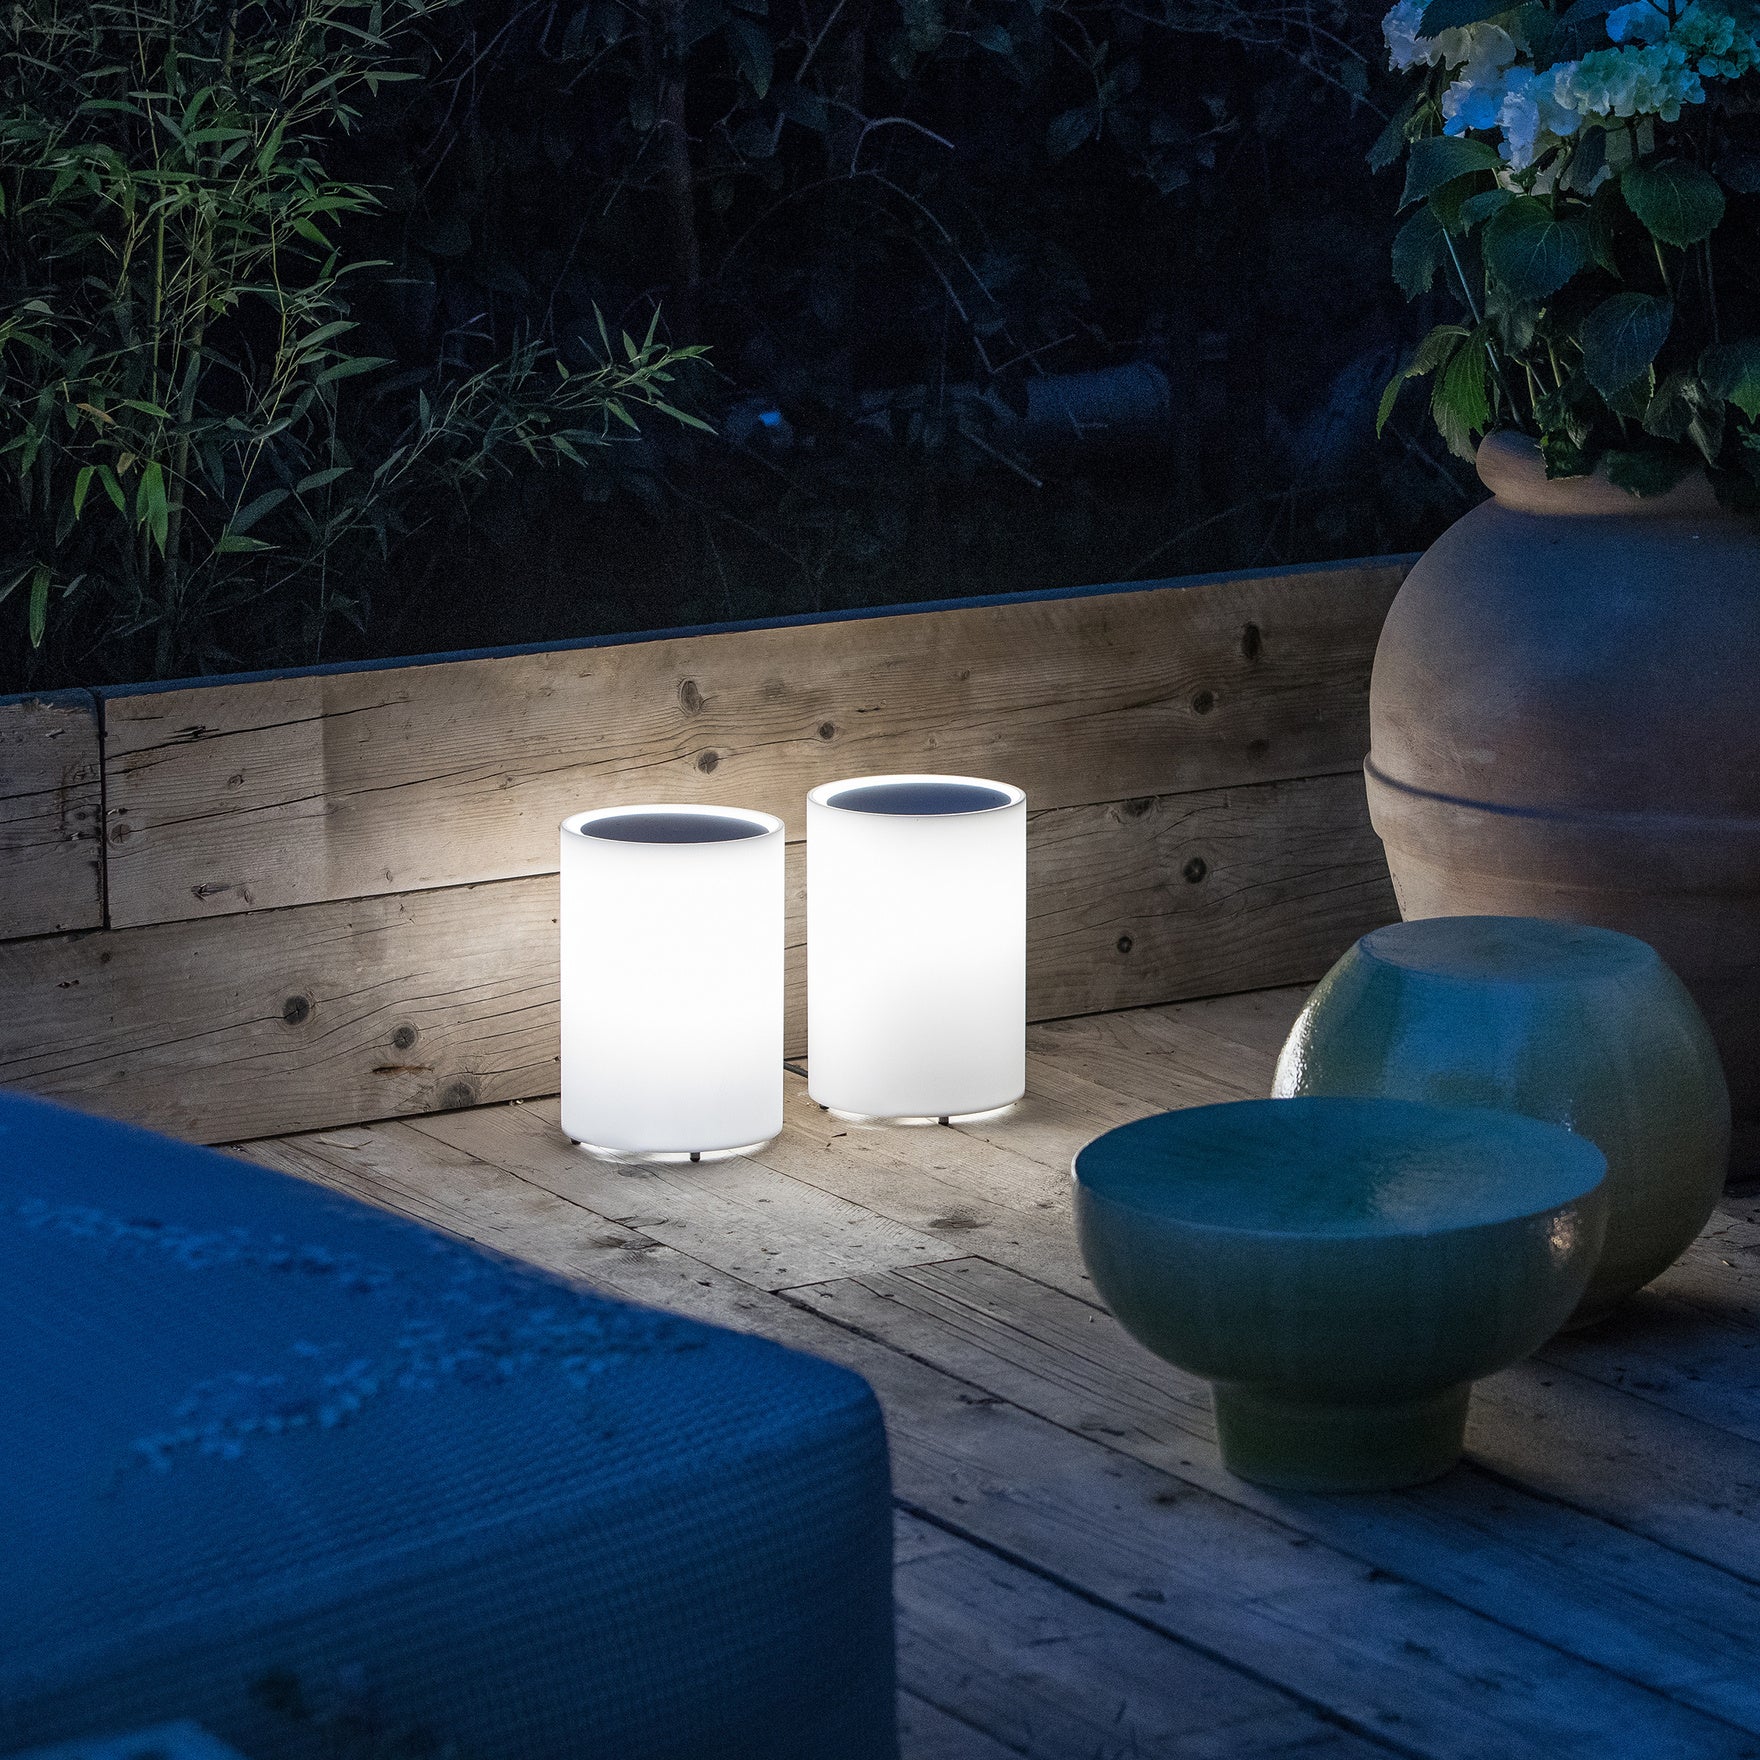 Lenta outdoor light in garden with timber deck & flower pots